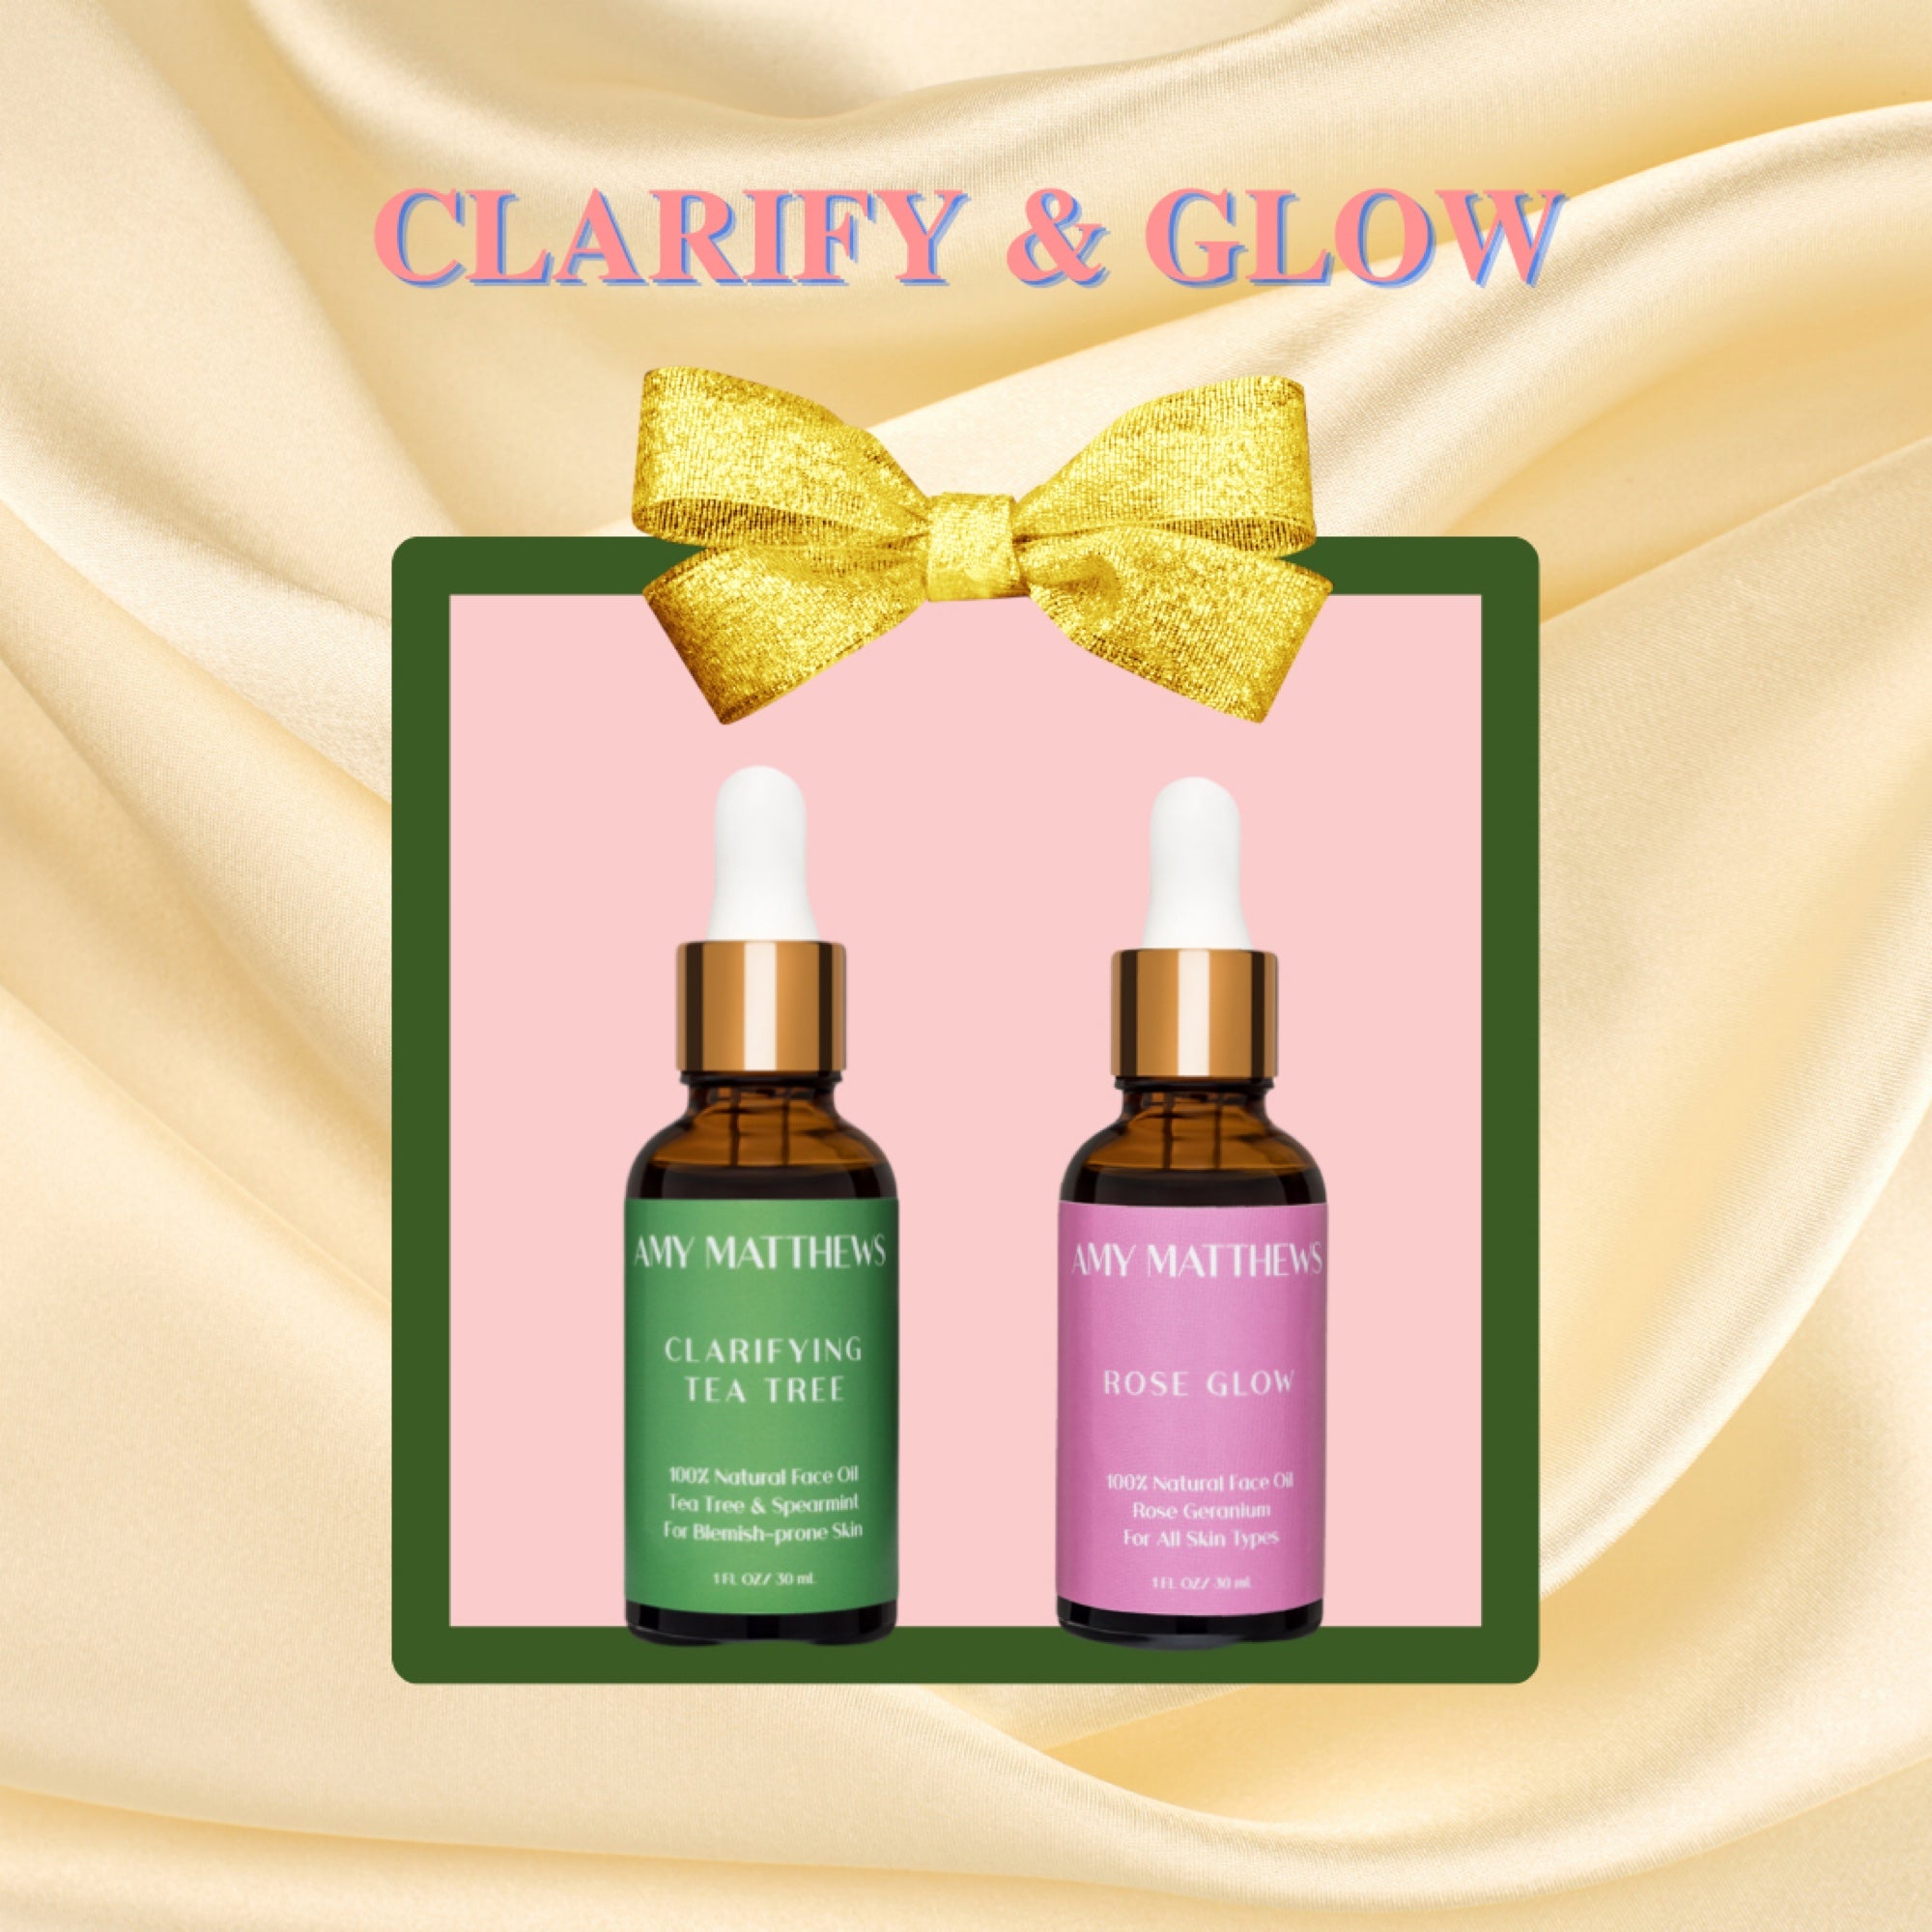 Clarify and Glow Skincare Kit